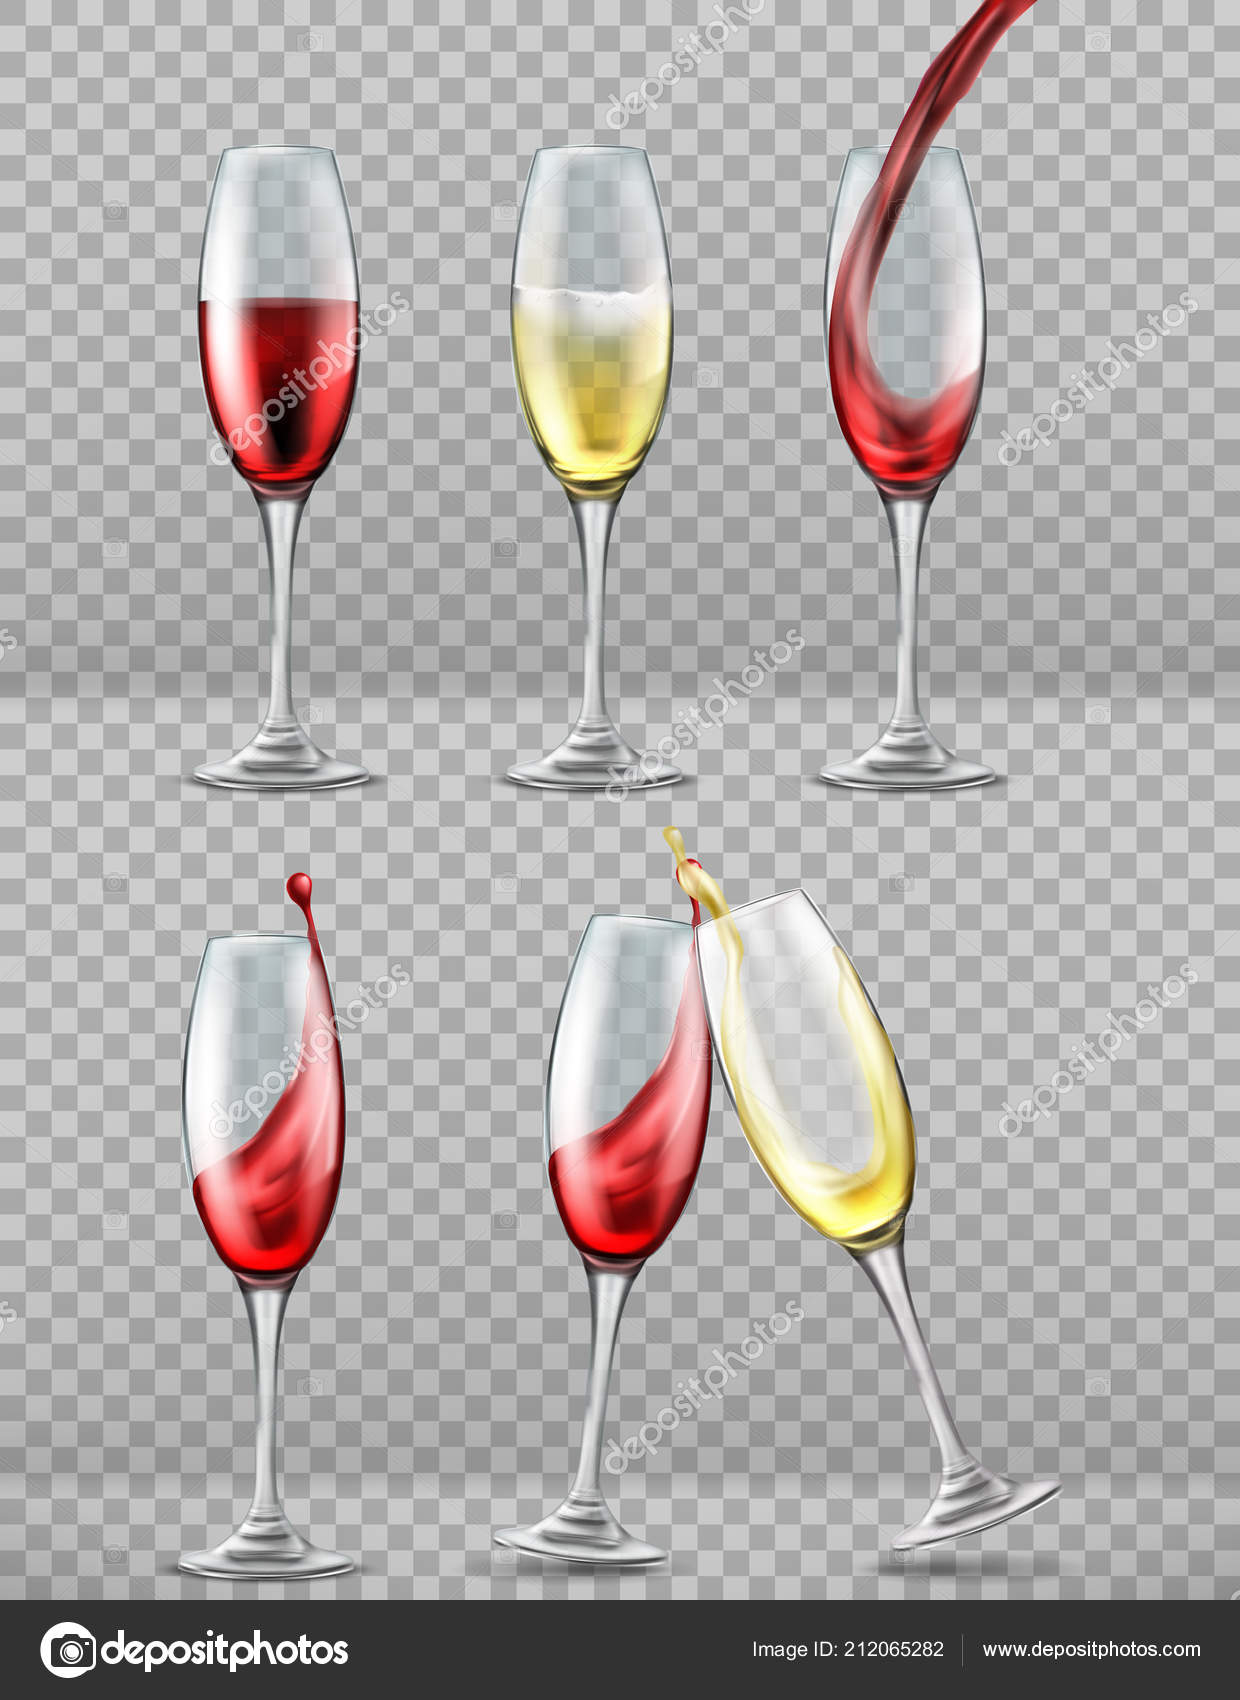 https://st4.depositphotos.com/9058402/21206/v/1600/depositphotos_212065282-stock-illustration-two-wine-glasses-with-red.jpg